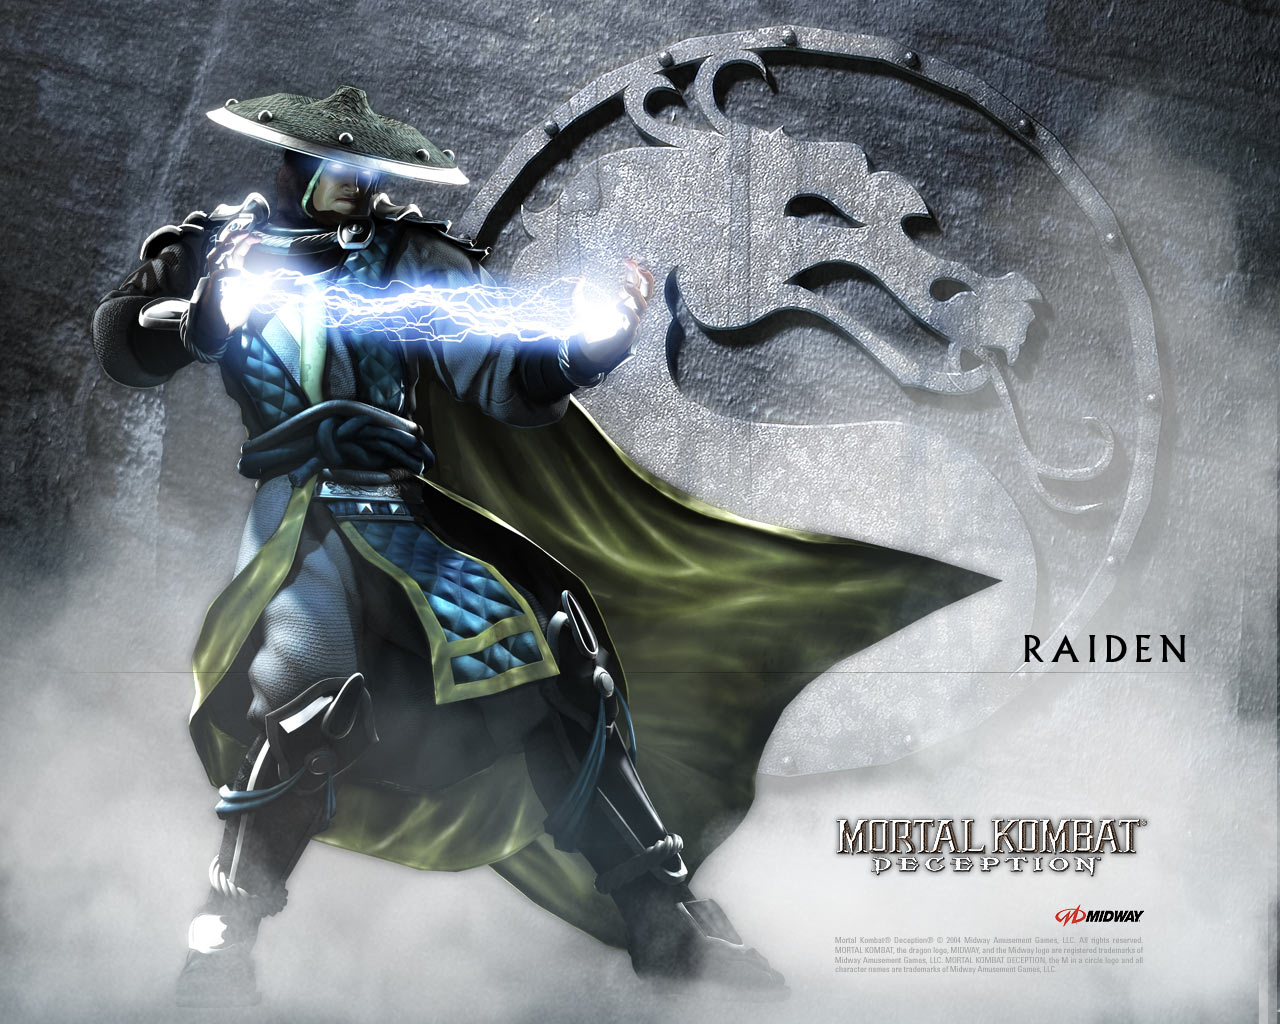 Previous, Games - Raiden MK wallpaper